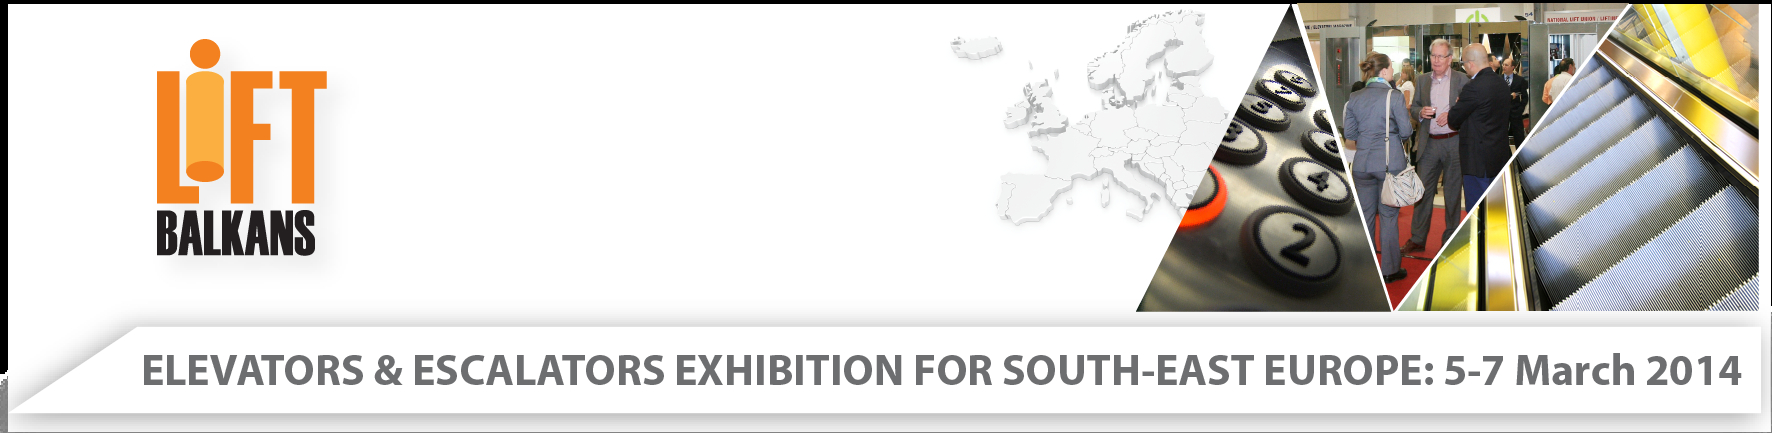 LiftBalkans - South-East European Exhibition on Elevators and Escalators